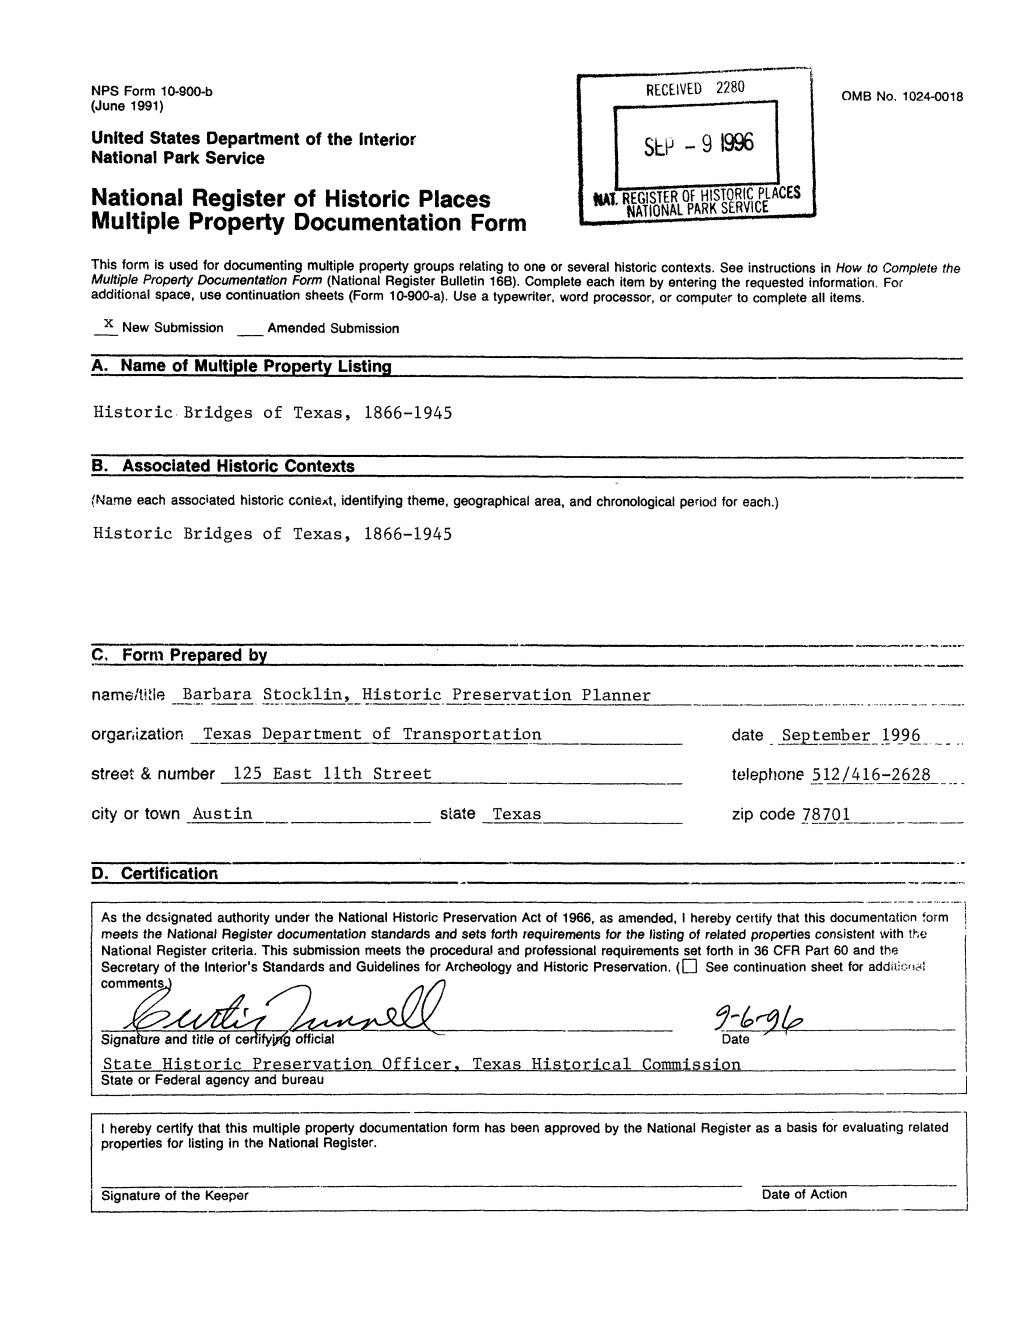 National Register of Historic Places Multiple Property Documentation Form, Section F on Metal Beam Highway Bridges, June 29, 1992, Pp